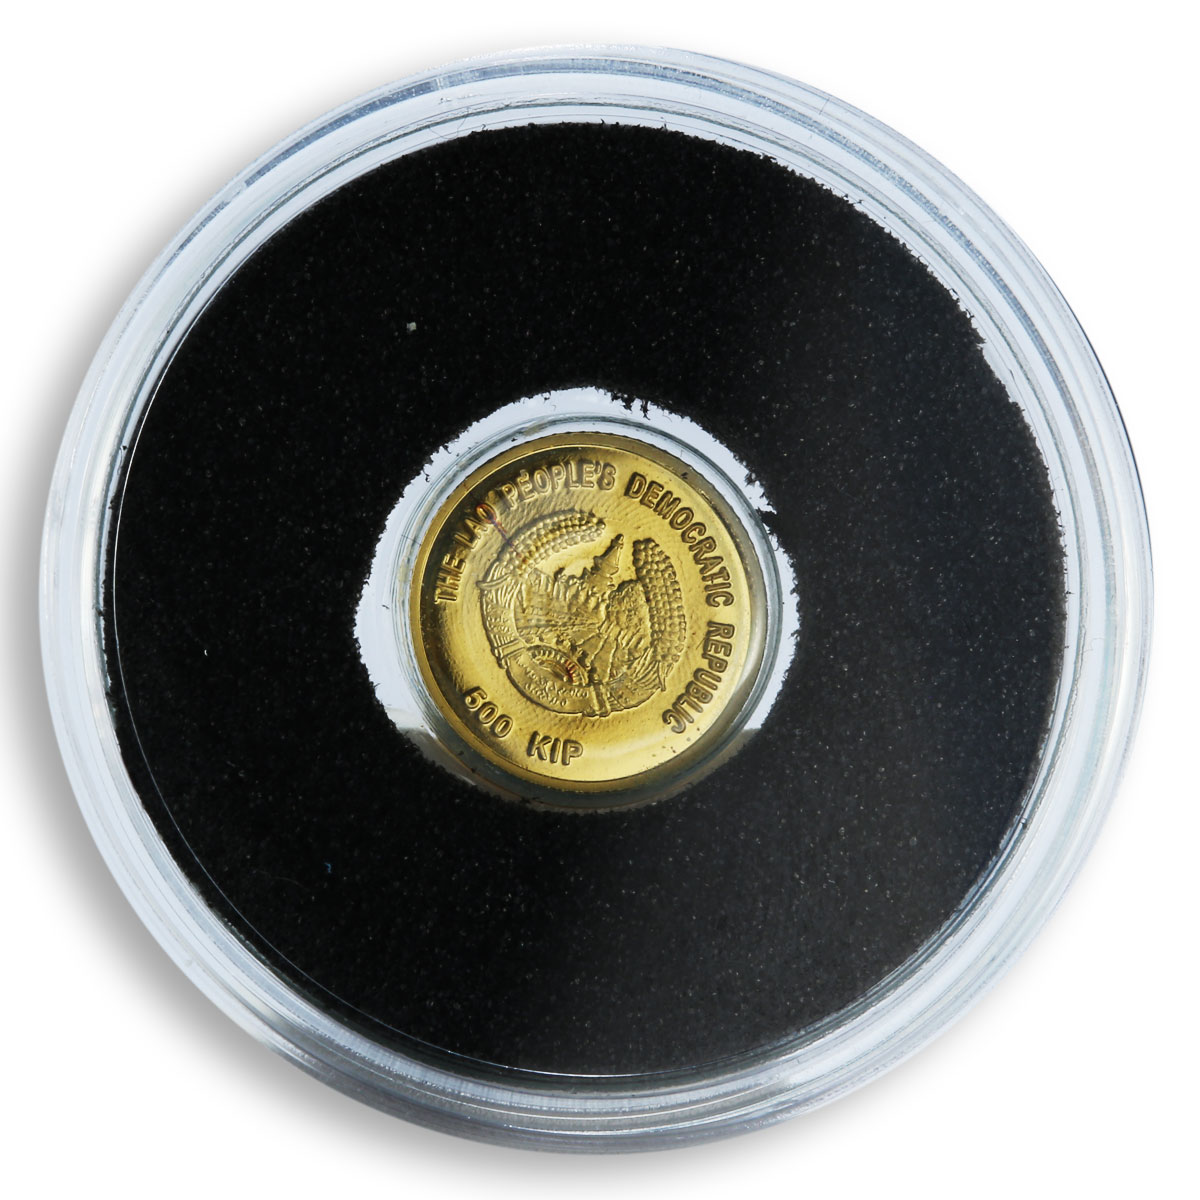 Laos 500 kip 50 Years Gold Panda proof gold coin 2012